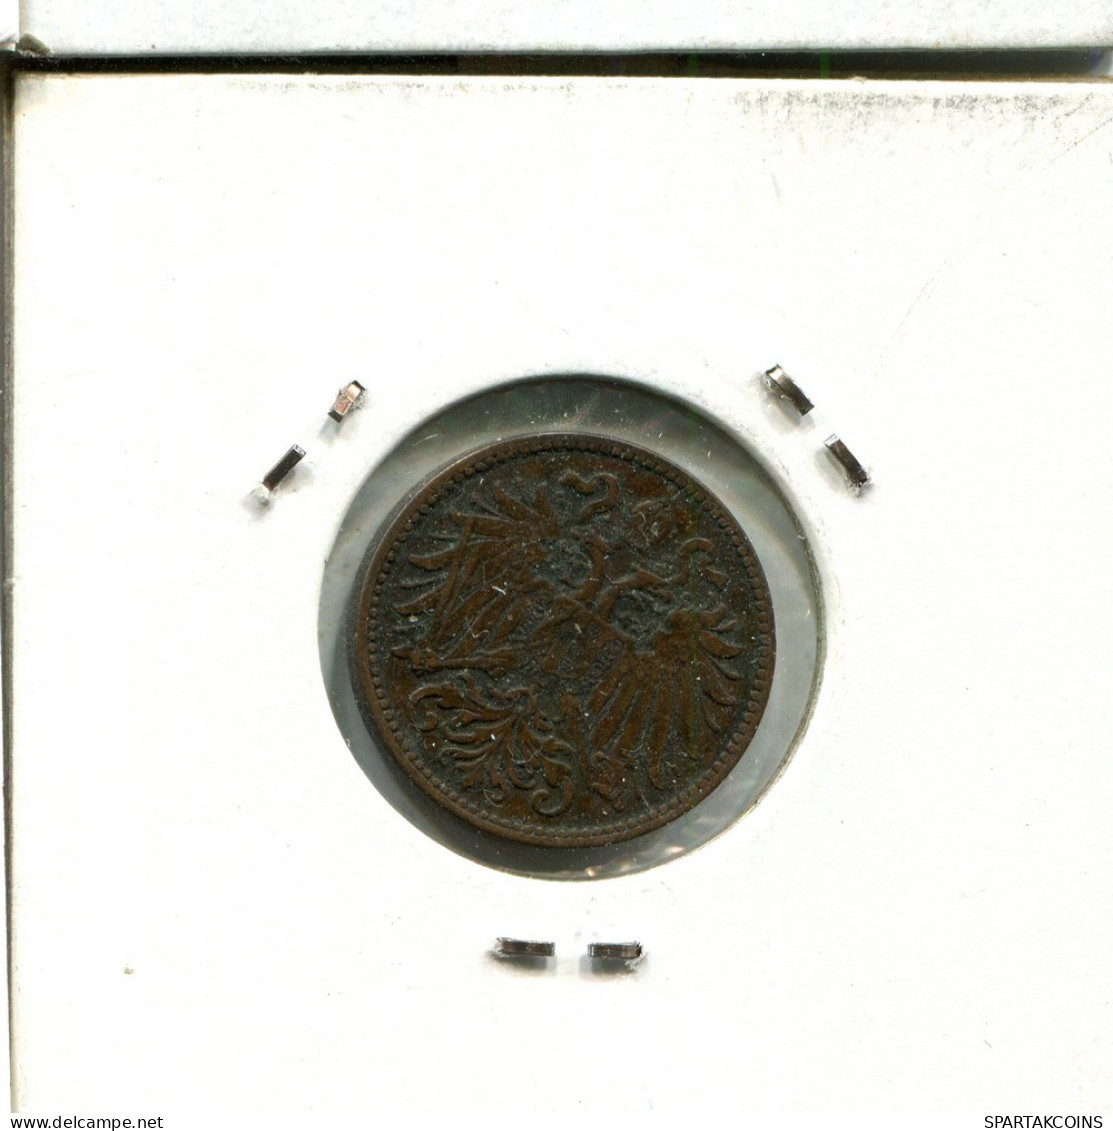 2 HELLER 1906 AUSTRIA Moneda #AT458.E.A - Austria